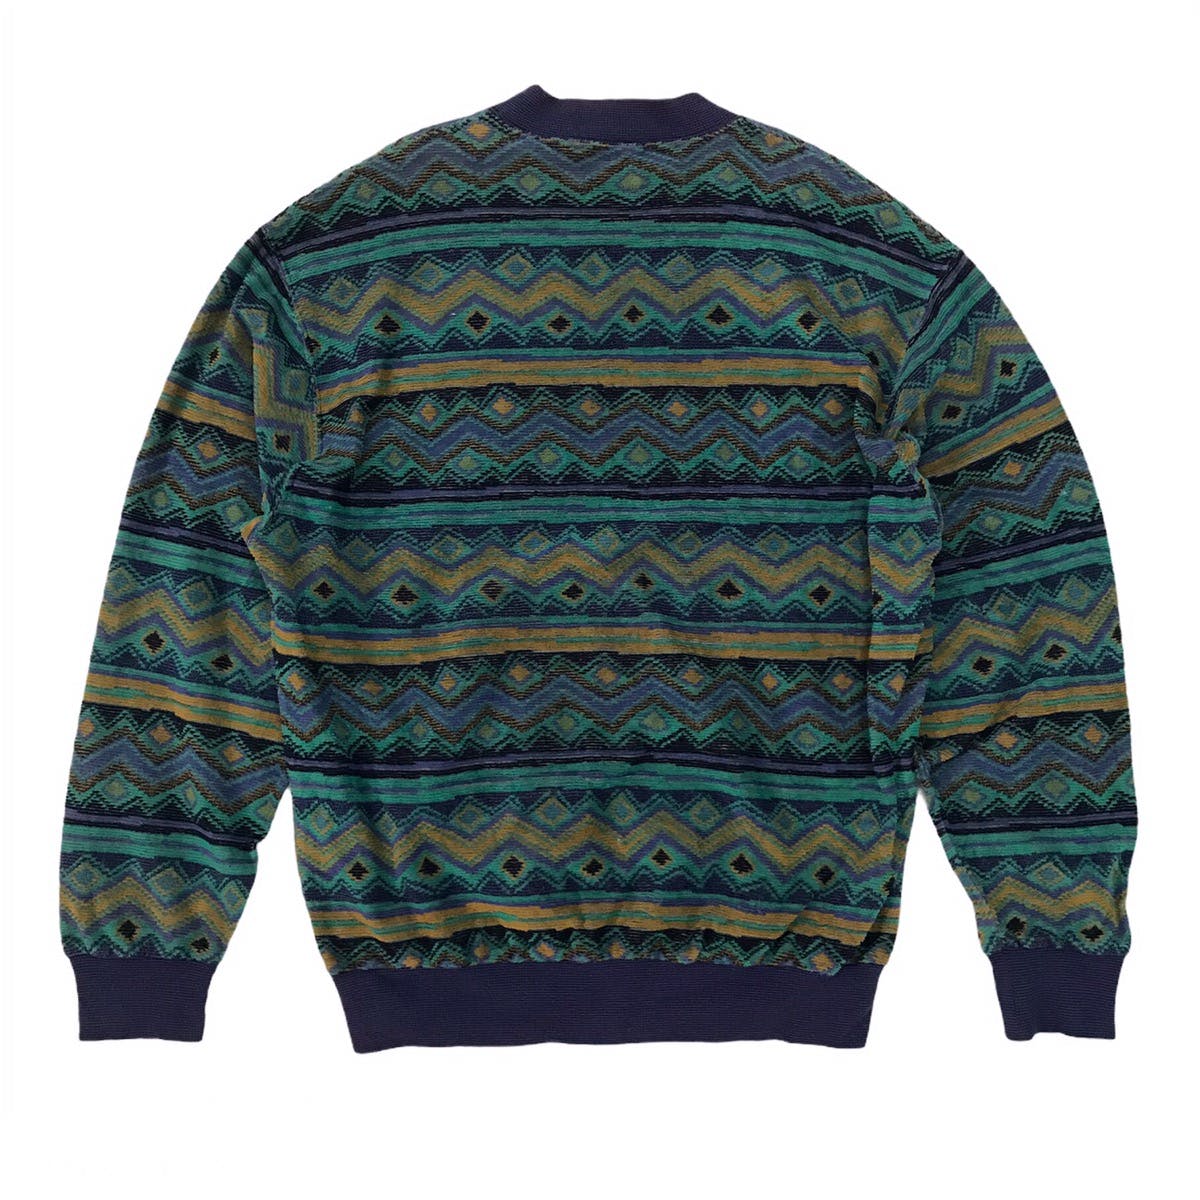 Missoni Sport Cozy Printed Sweater/Sweatshirt Jumper - 2